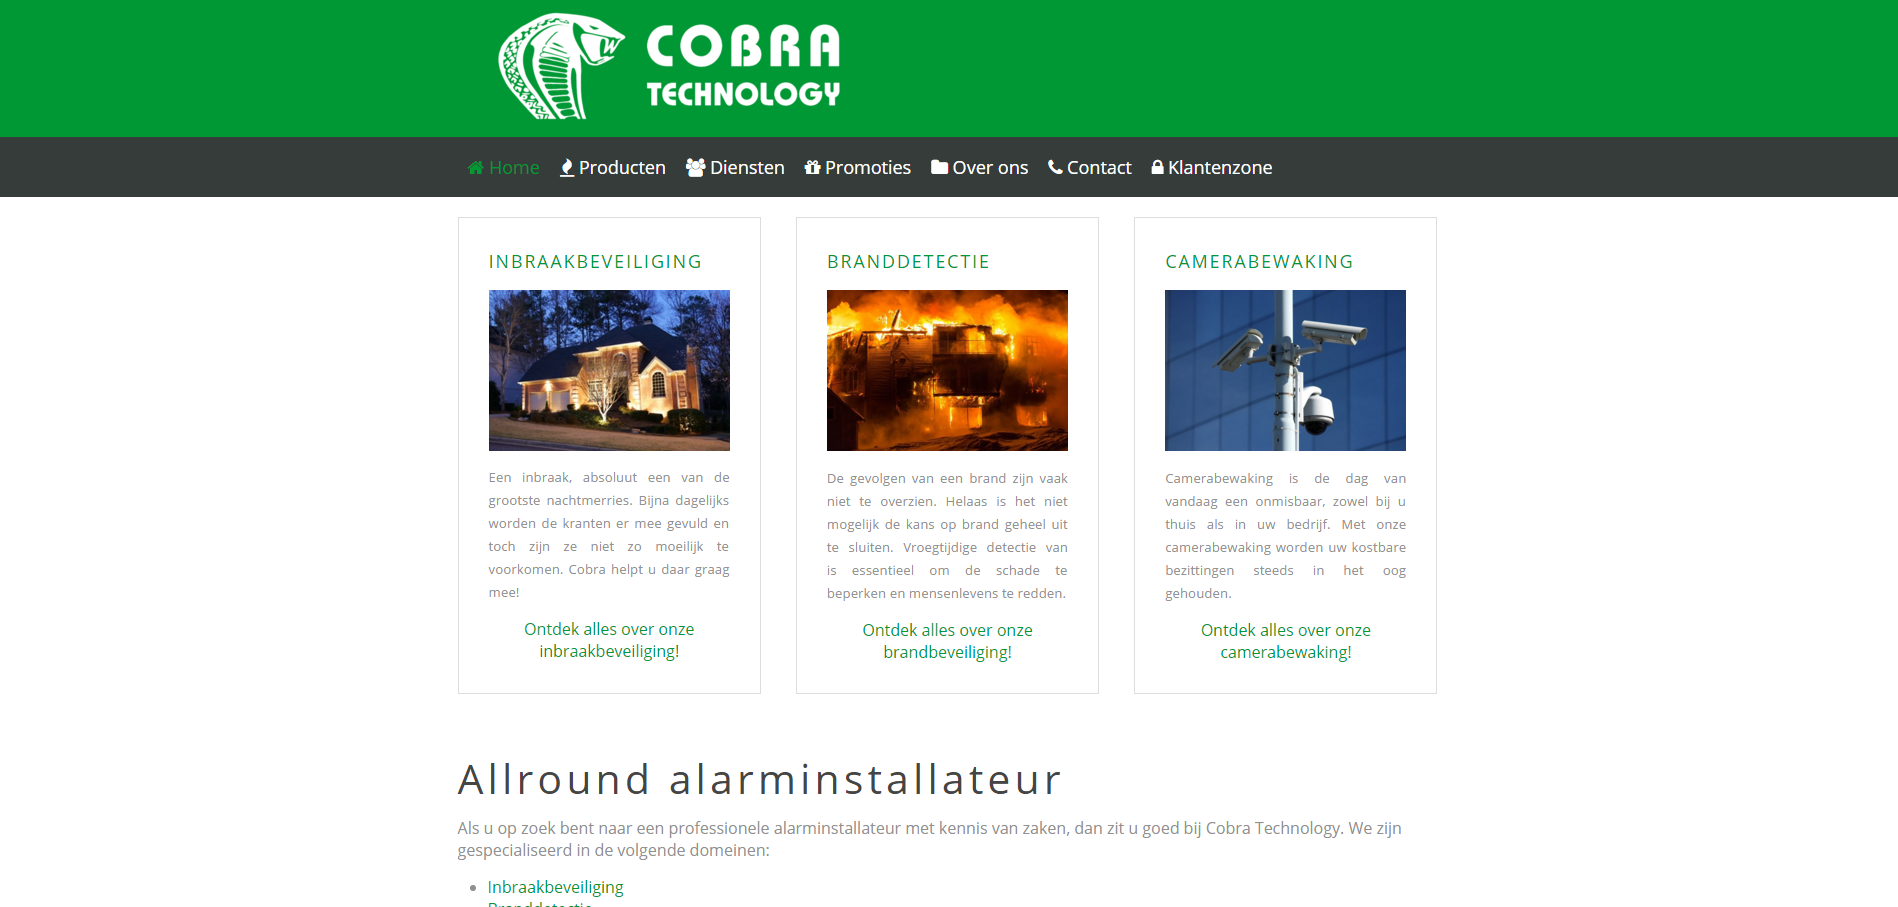 Cobra Technology - Alarminstallateur